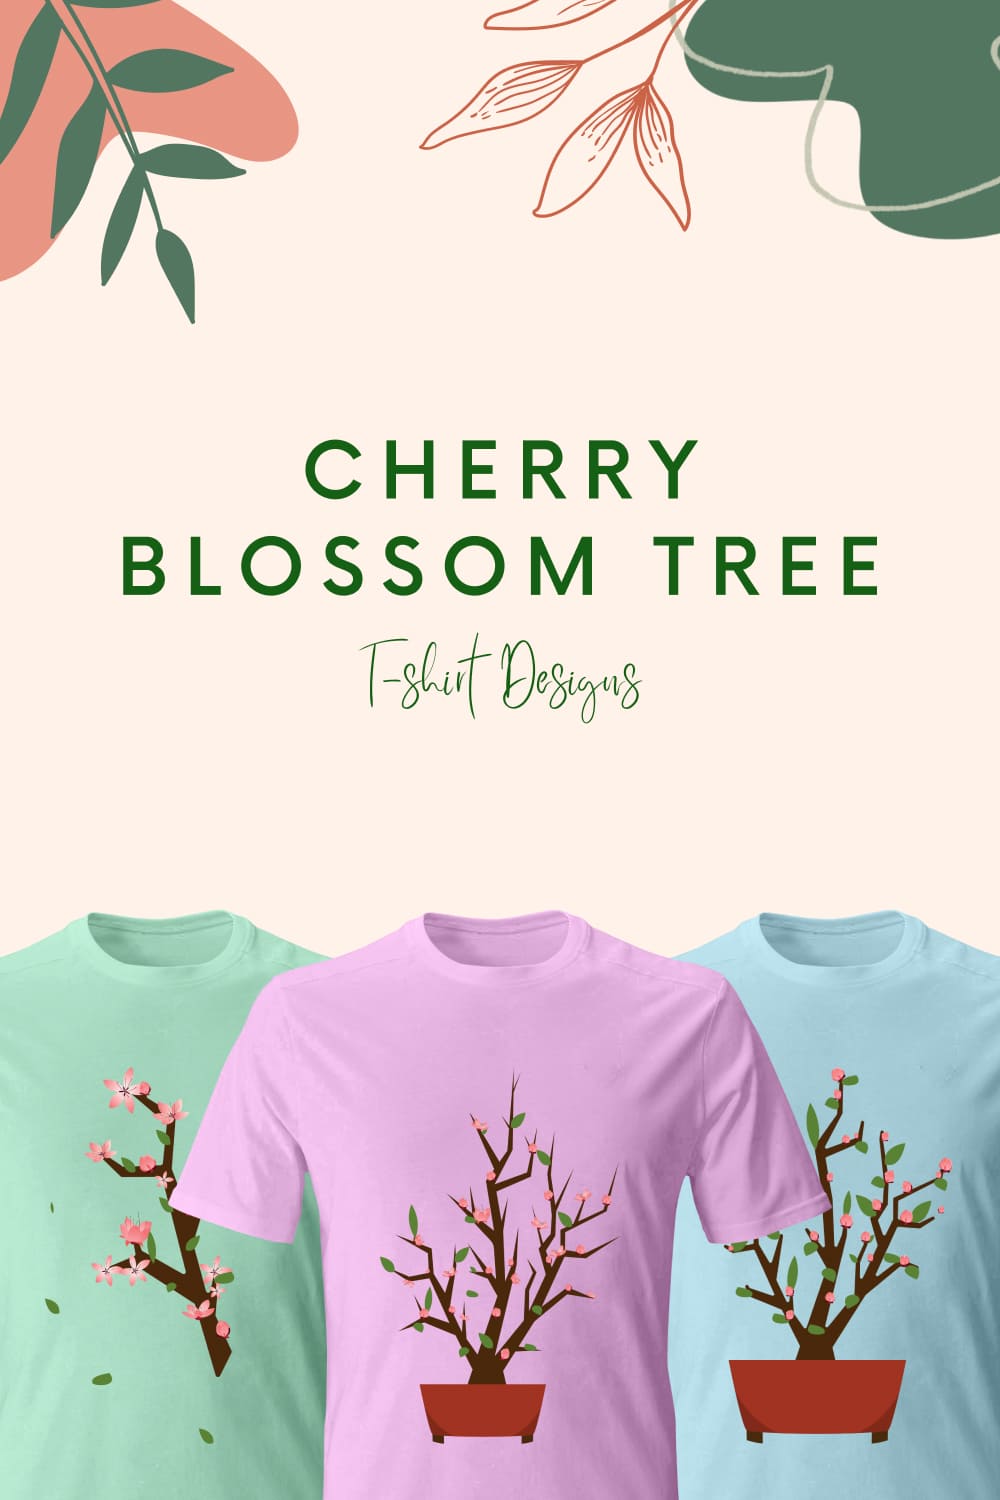 Cherry blossom tree t shirt designs iamges of pinterest.